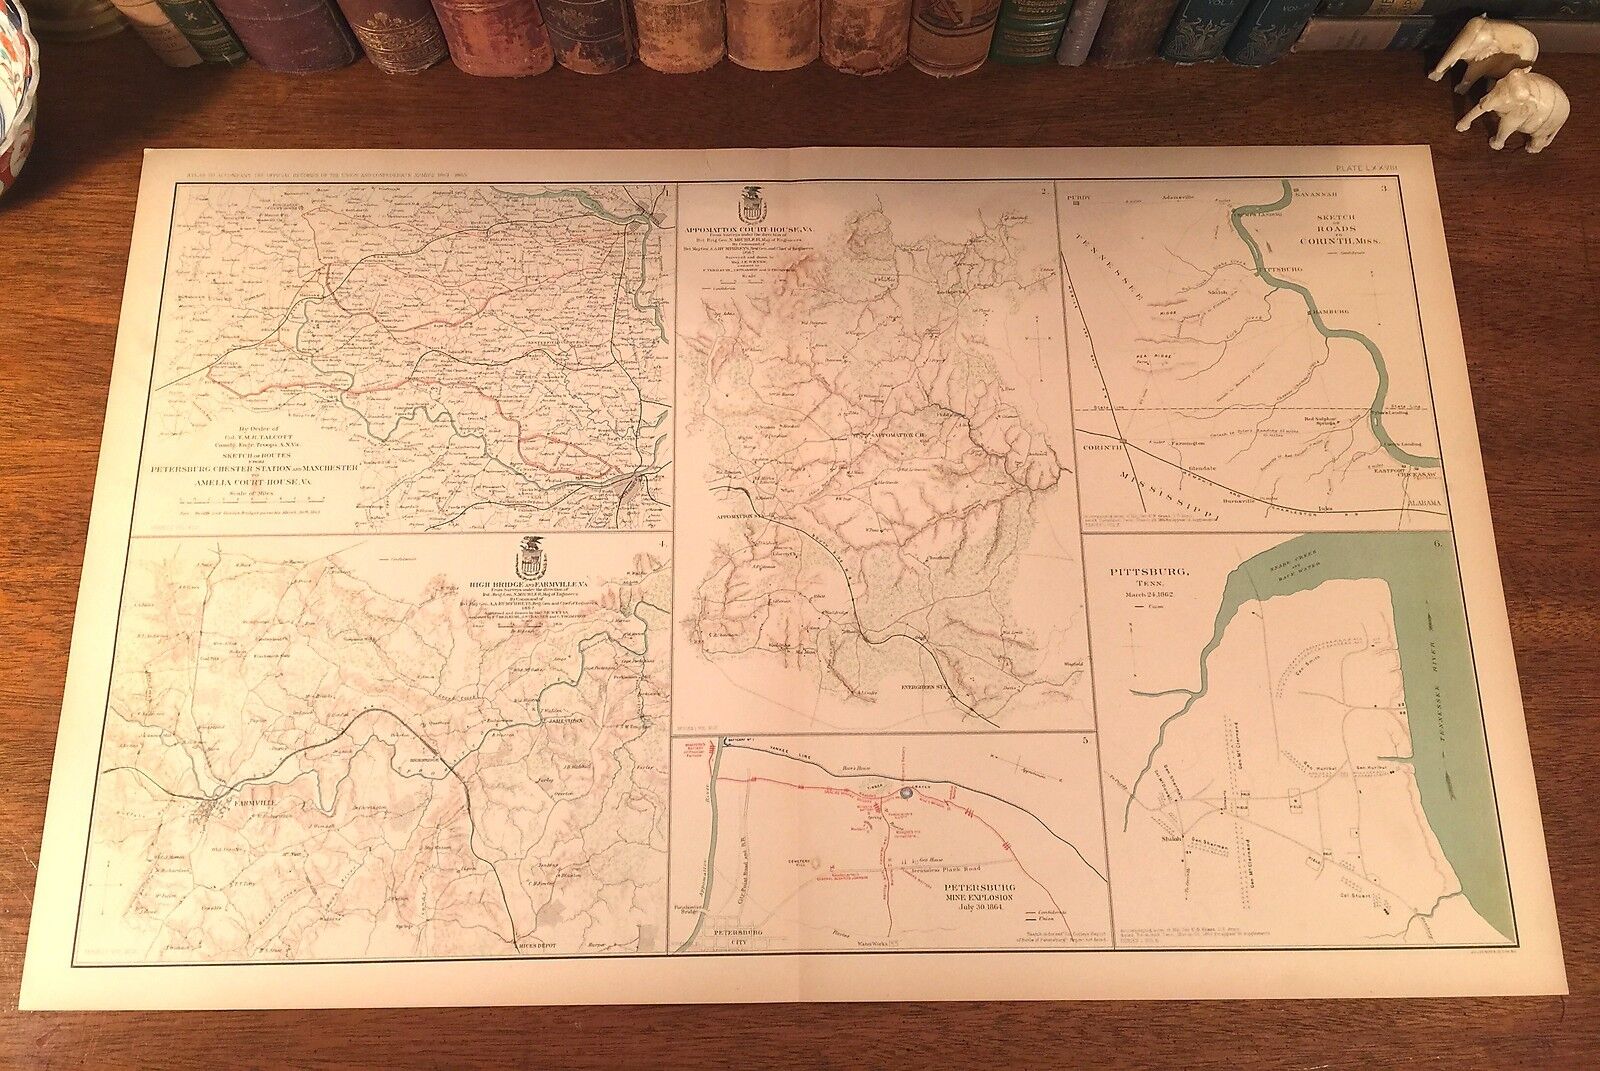 Original Antique Civil War Map APPOMATTOX COURT HOUSE Virginia PETERSBURG Routes